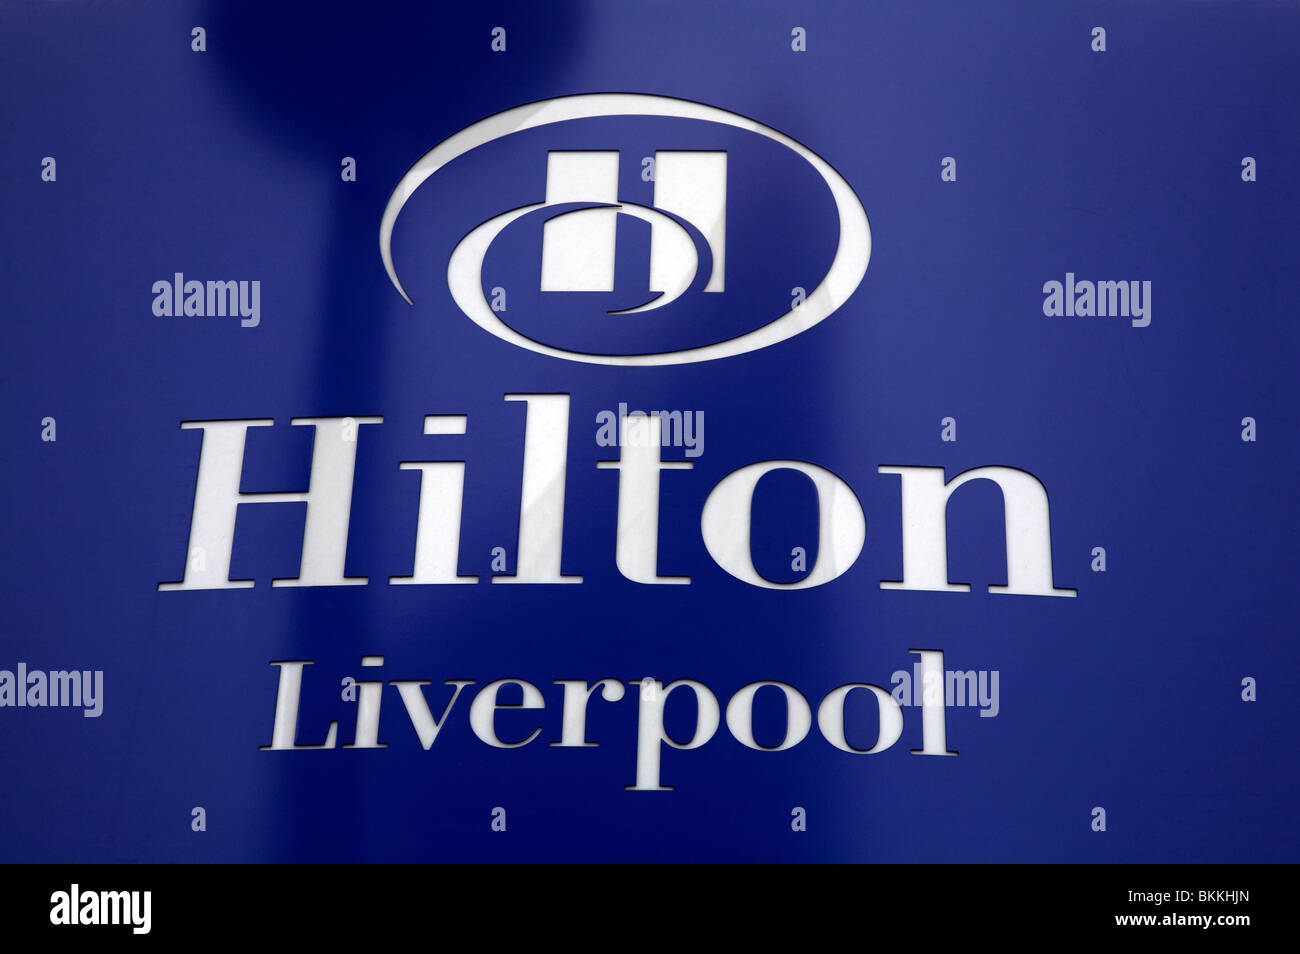 Liverpool Hilton hotel logo Stock Photo